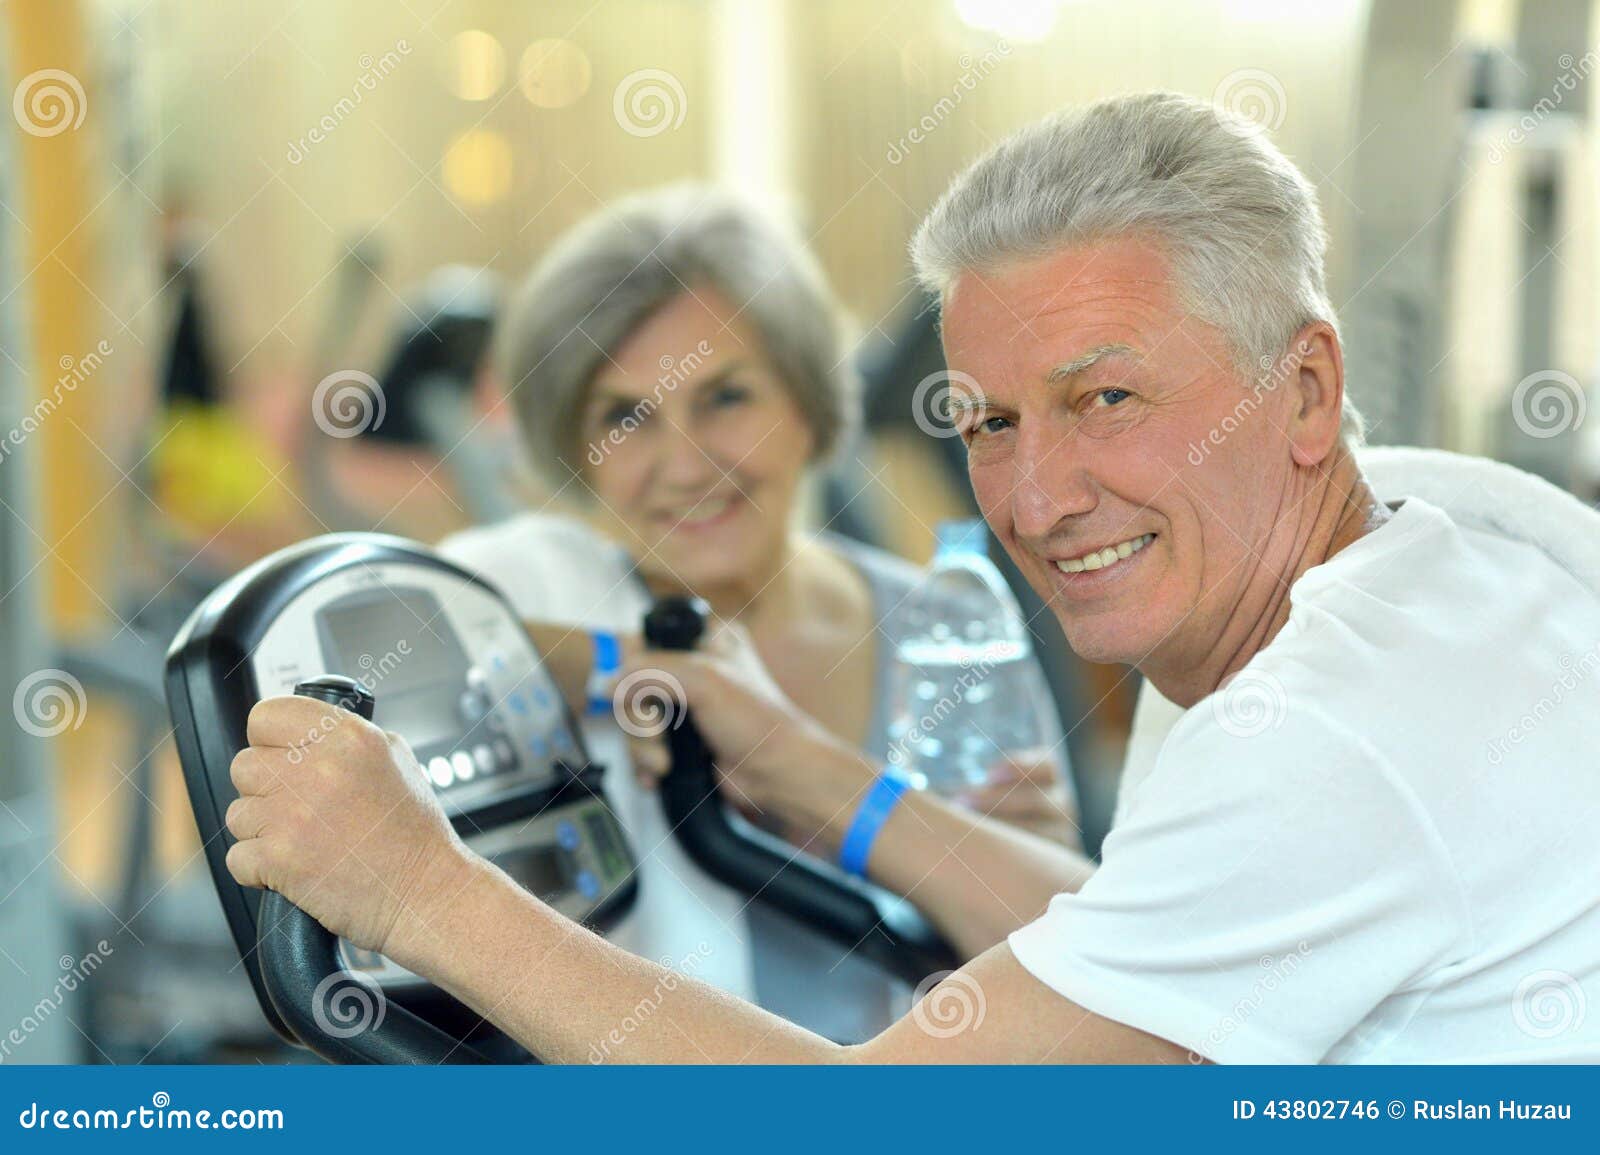 Senior Couple Exercising In Gym Stock Photo Image Of Medical Smiling